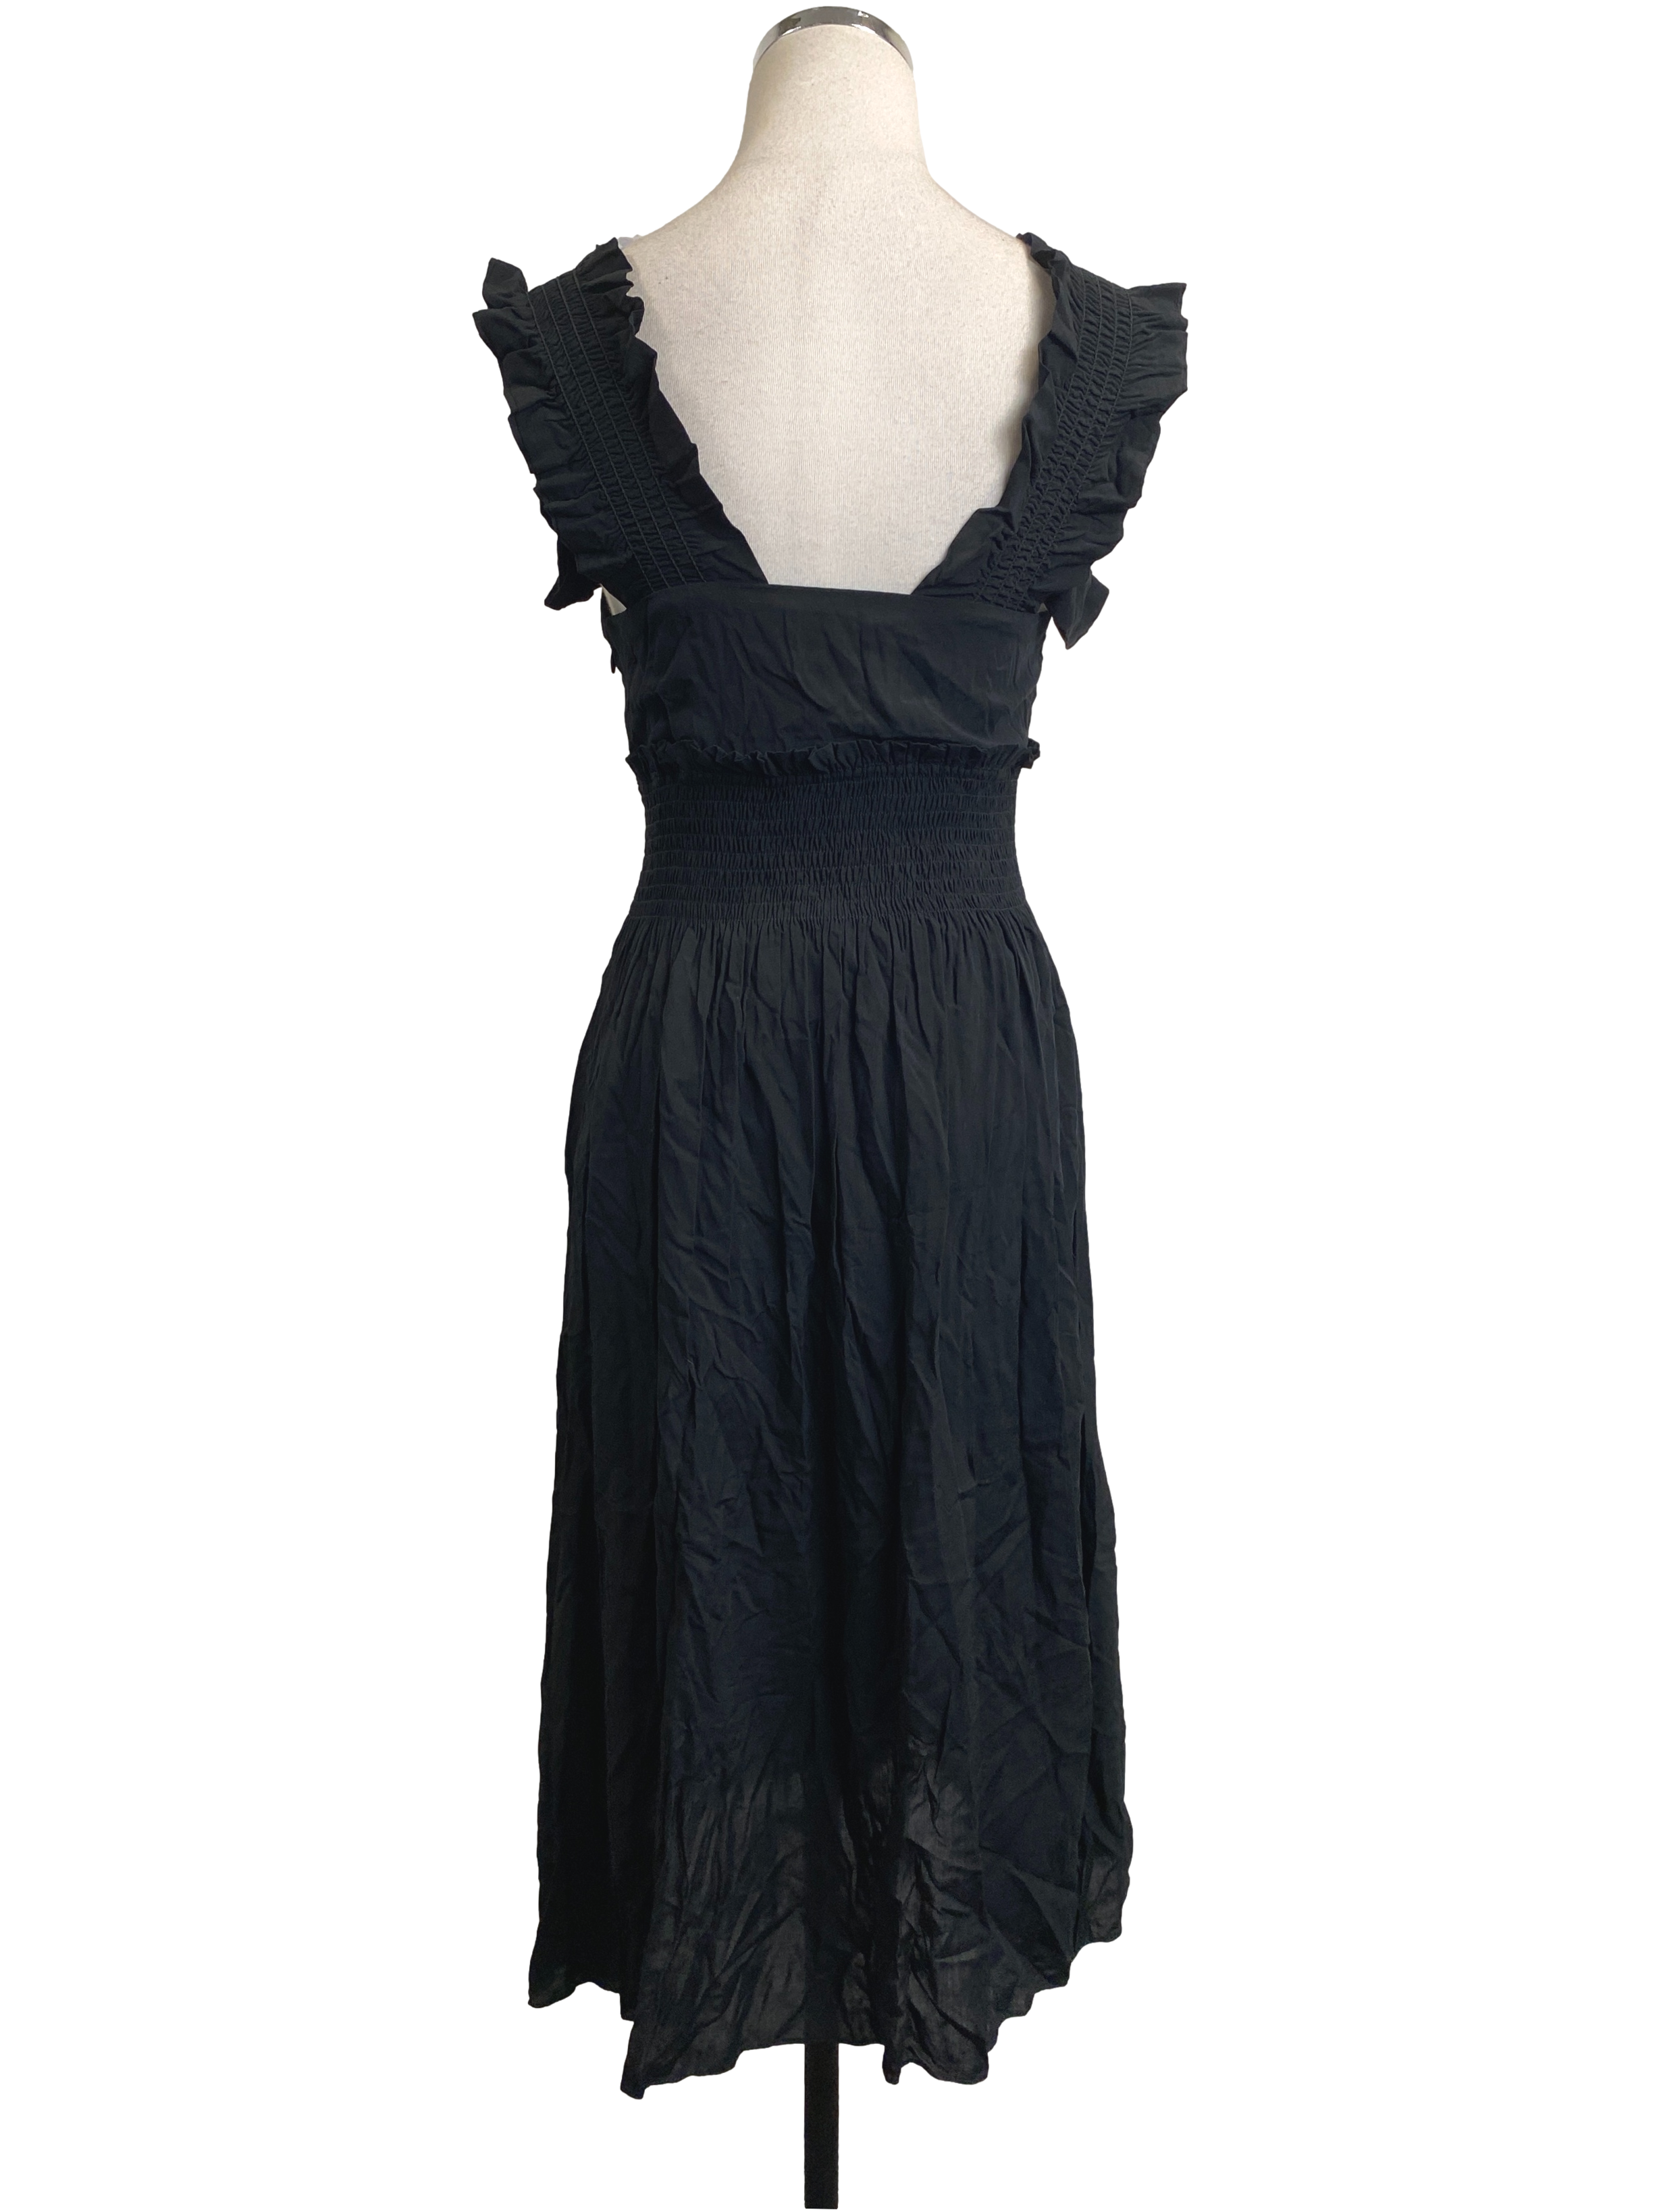 Black Ruffle Sleeve Smocked Dress